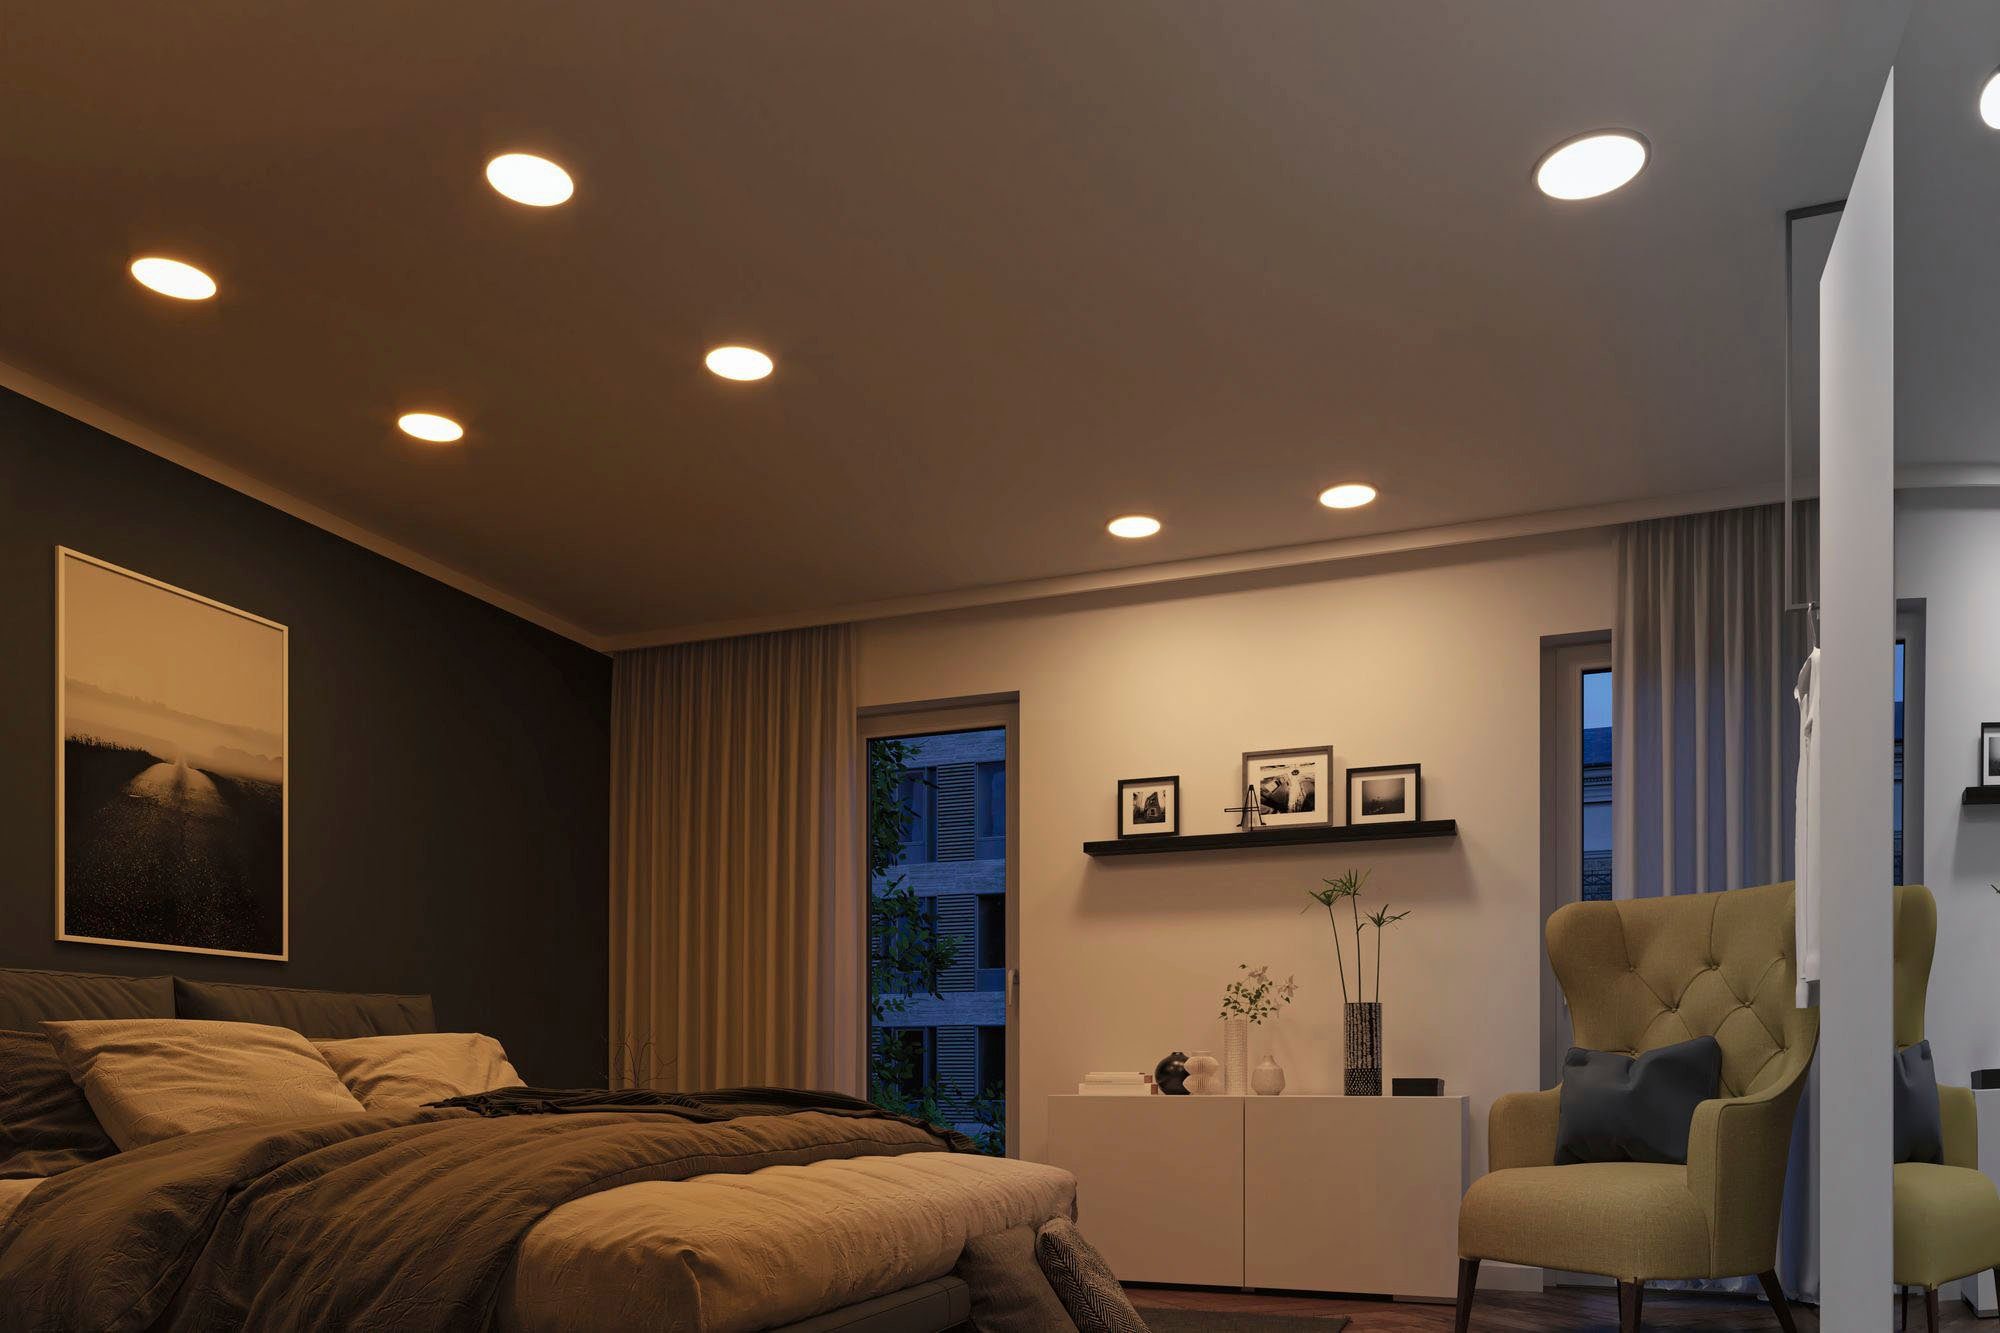 warmweiß LED-Modul, - integriert, Weiß kaltweiß, Tunable White LED Areo, Home, Paulmann Smart LED Einbauleuchte fest